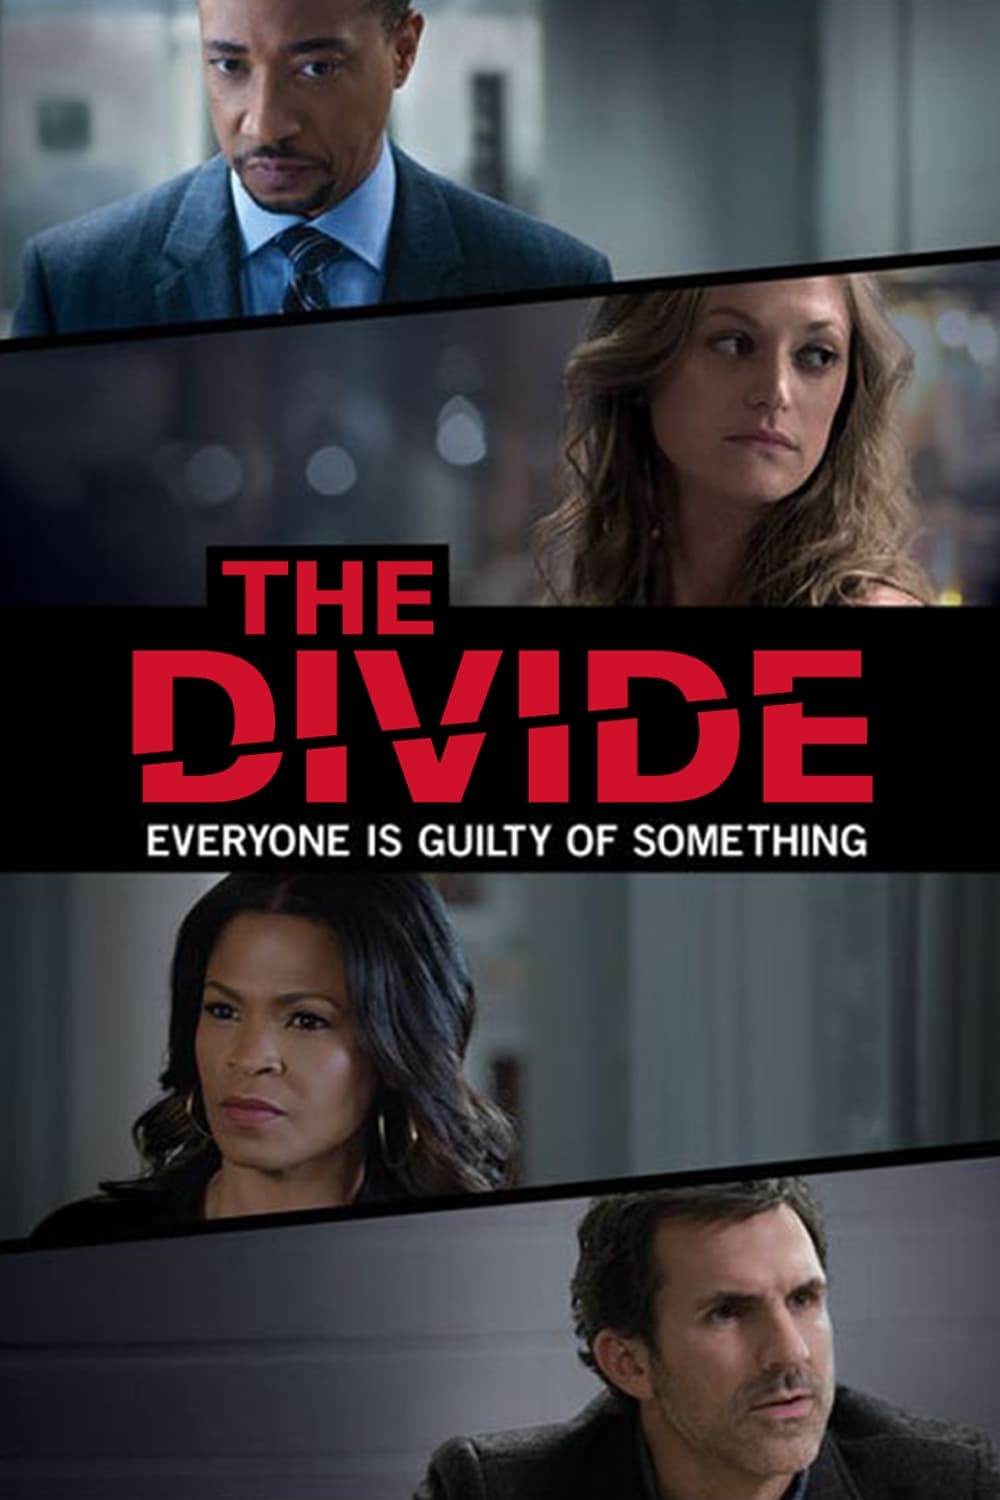 Plakát pro film “The Divide – Zlom”